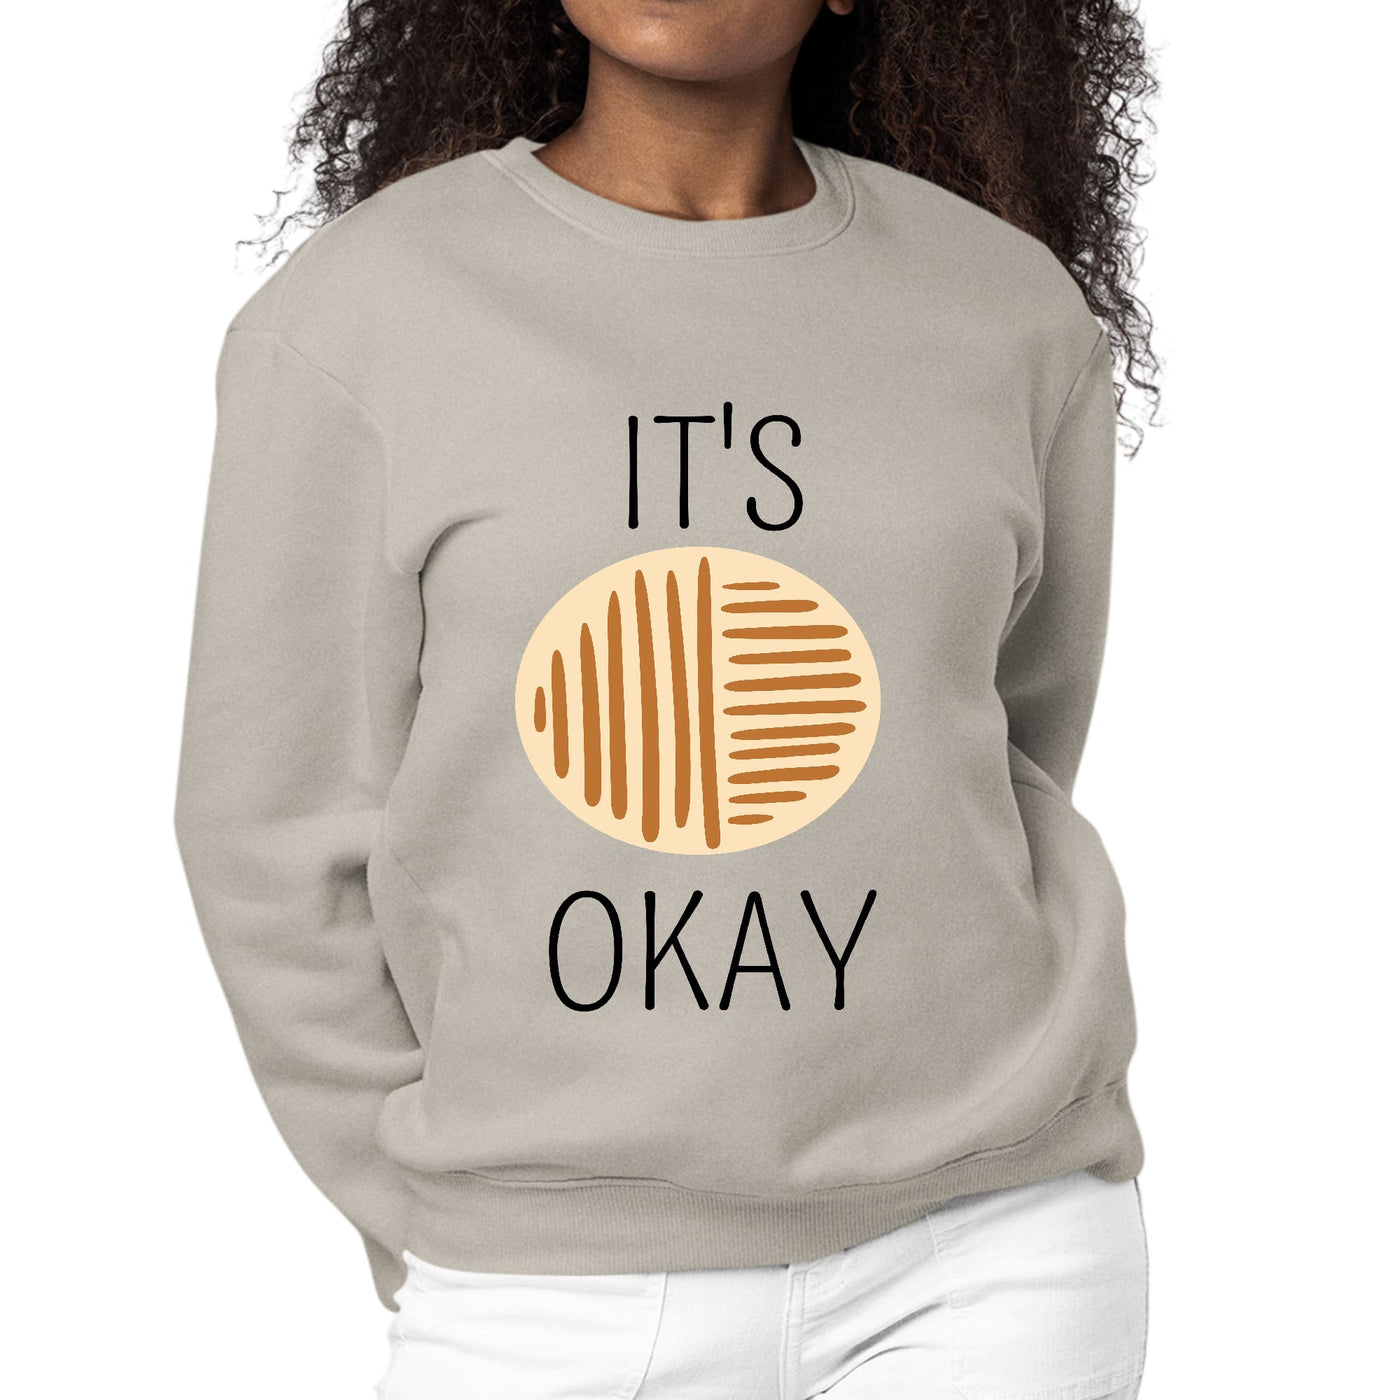 Womens Graphic Sweatshirt Say It Soul Its Okay Black And Brown Line - Womens